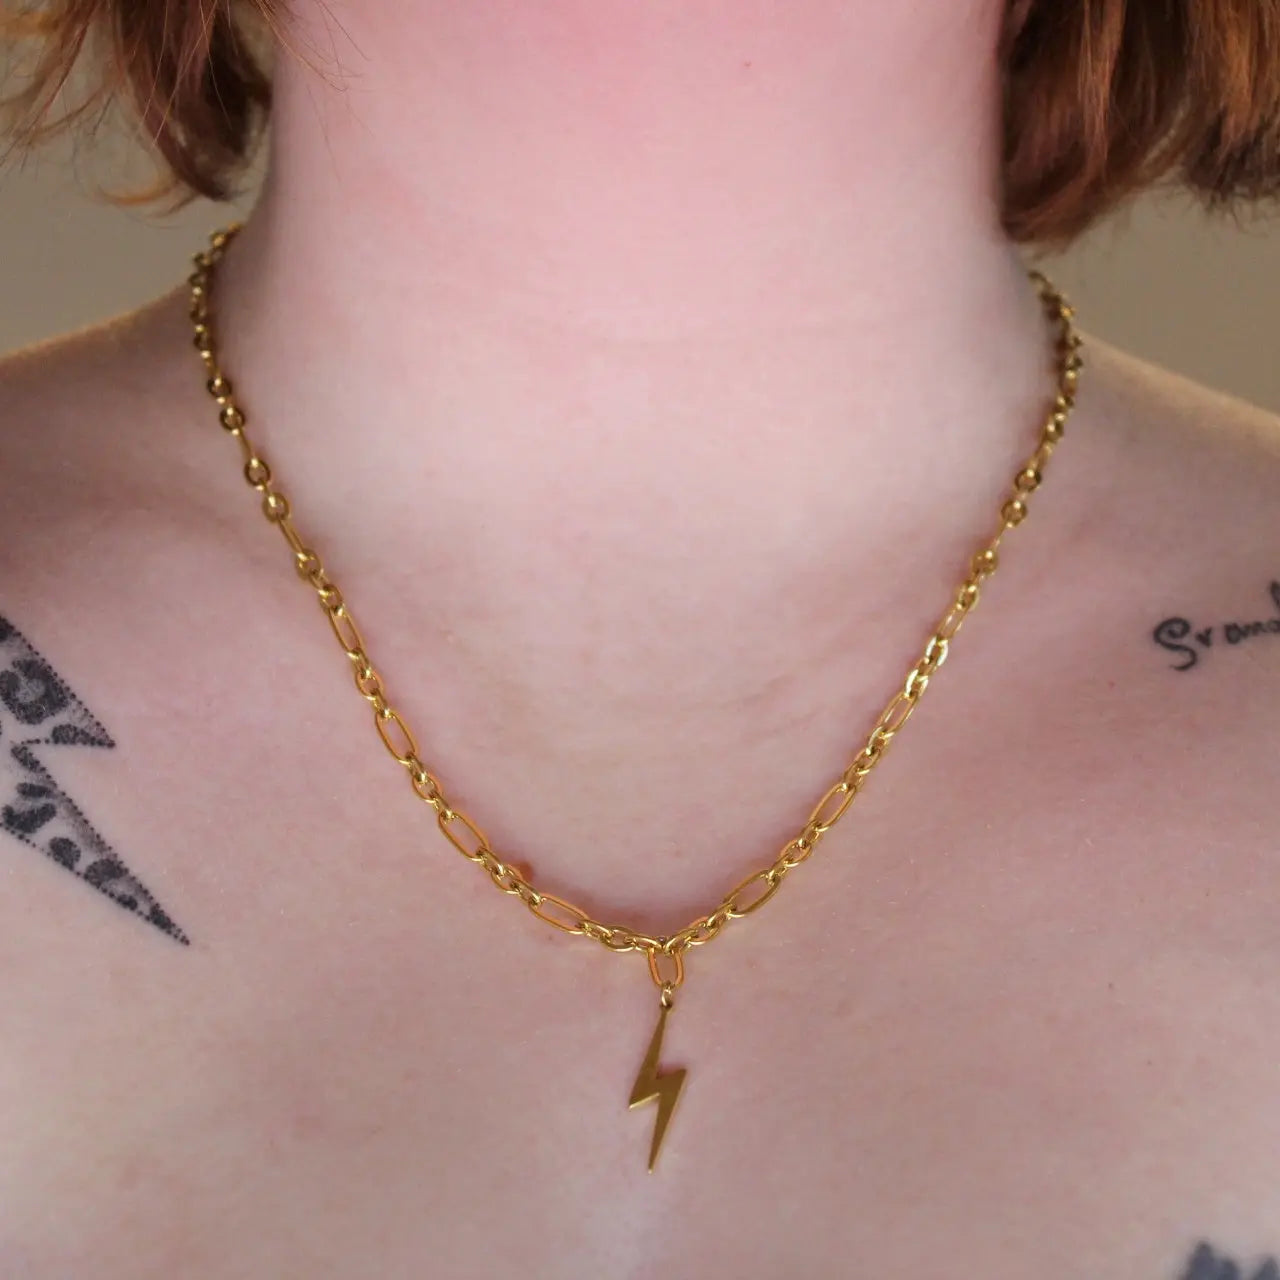 Chunky chain lightning bolt necklace